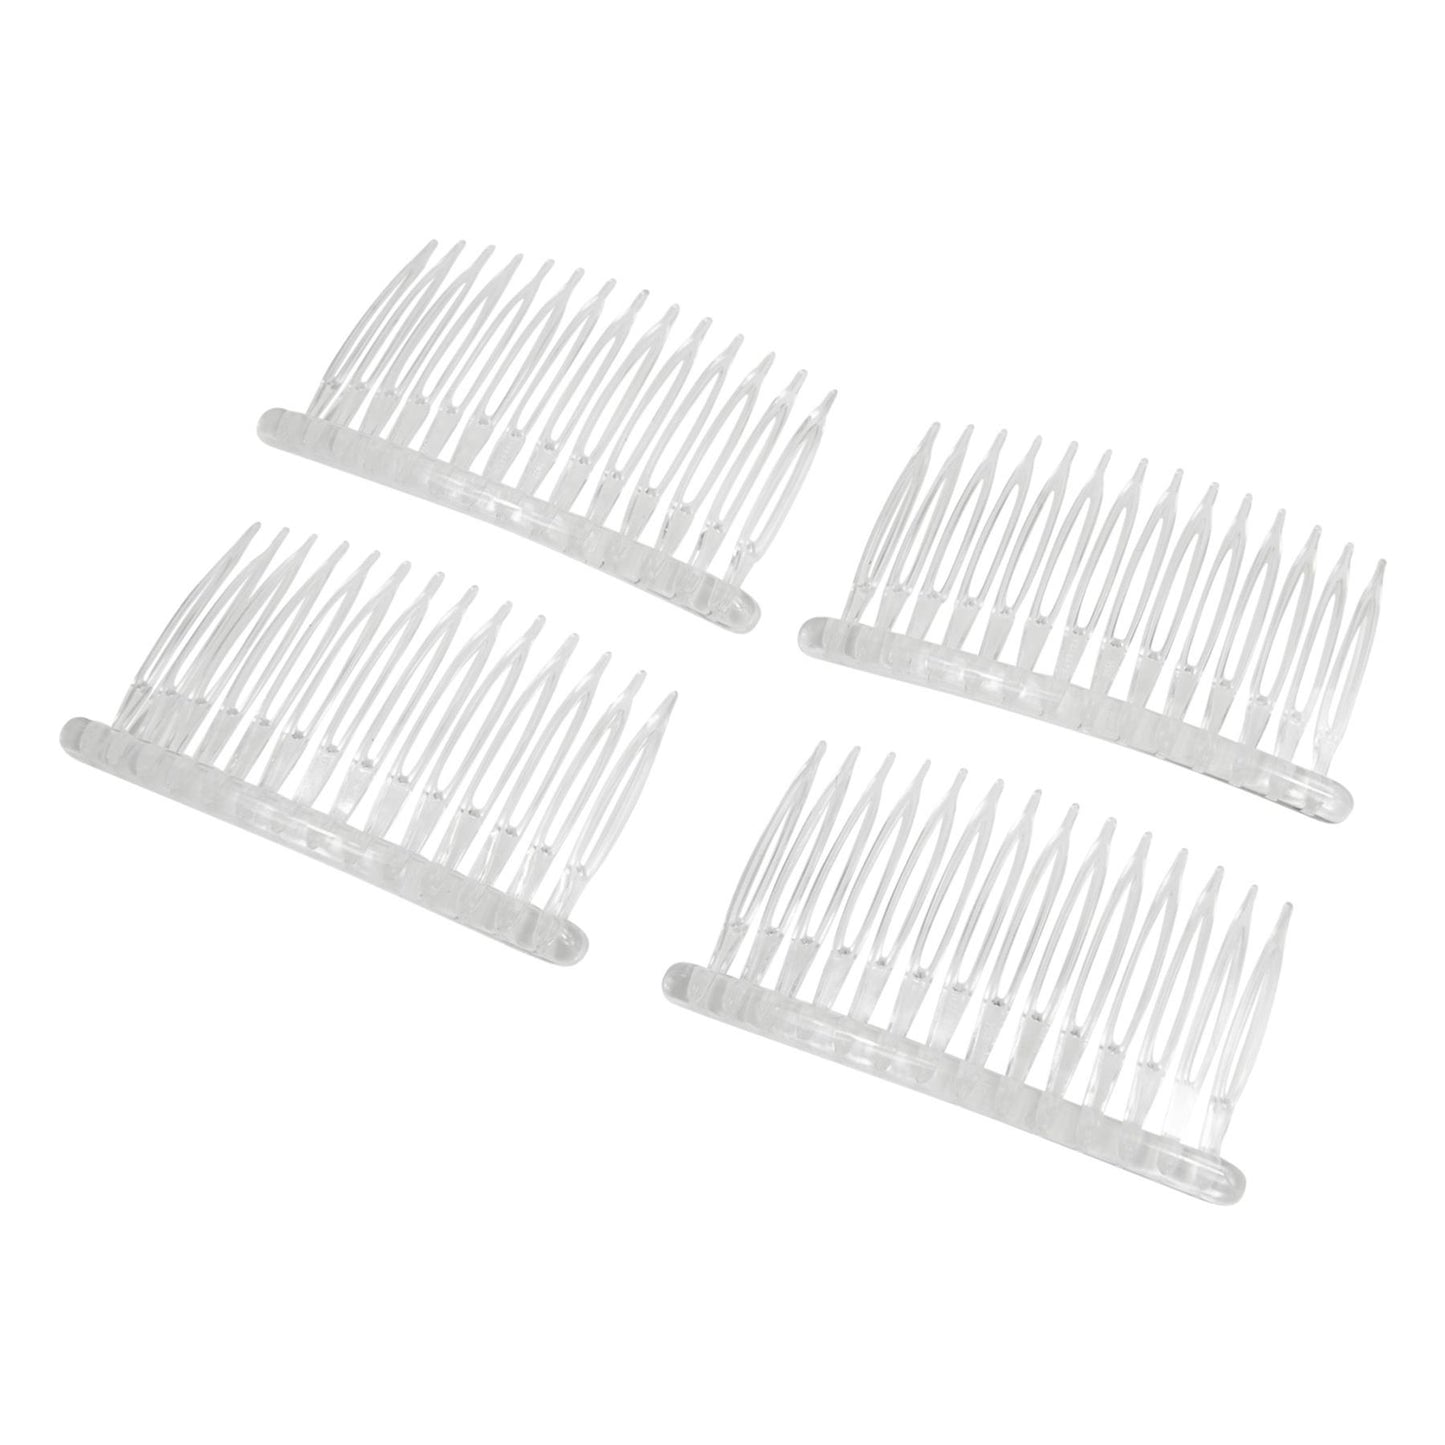 Split Tooth Plastic Comb 4 x 7.5cm x 4pc HB004